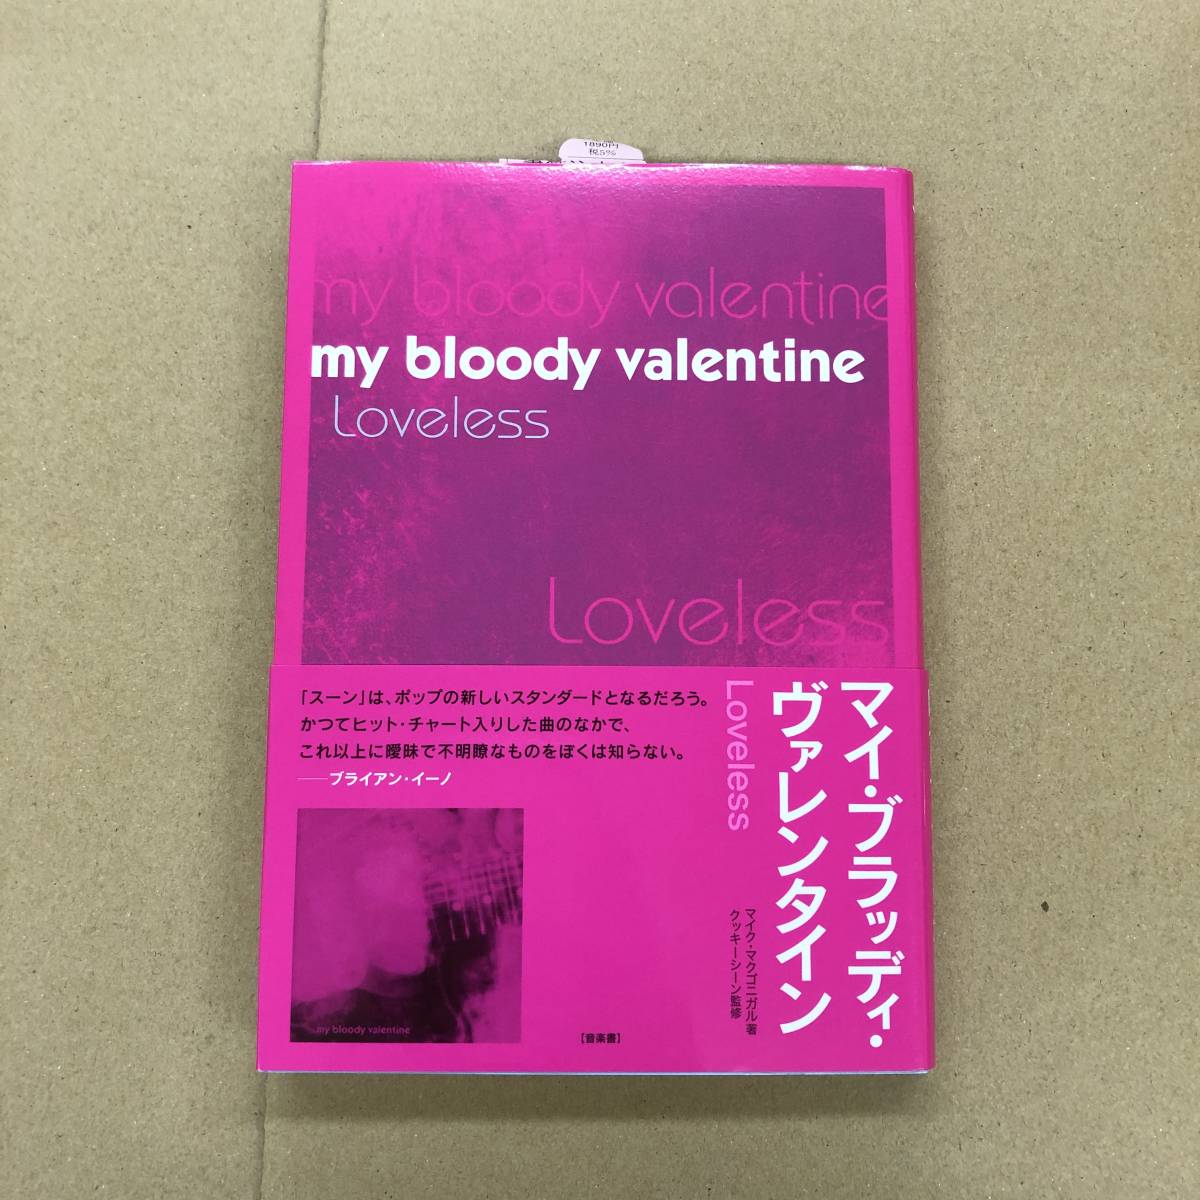 (BOOK) マイ・ブラッディ・ヴァレンタイン / My Bloody Valentine - ラヴレス / Loveless【9784860203252】インタビュー Kevin Shields 本_画像1